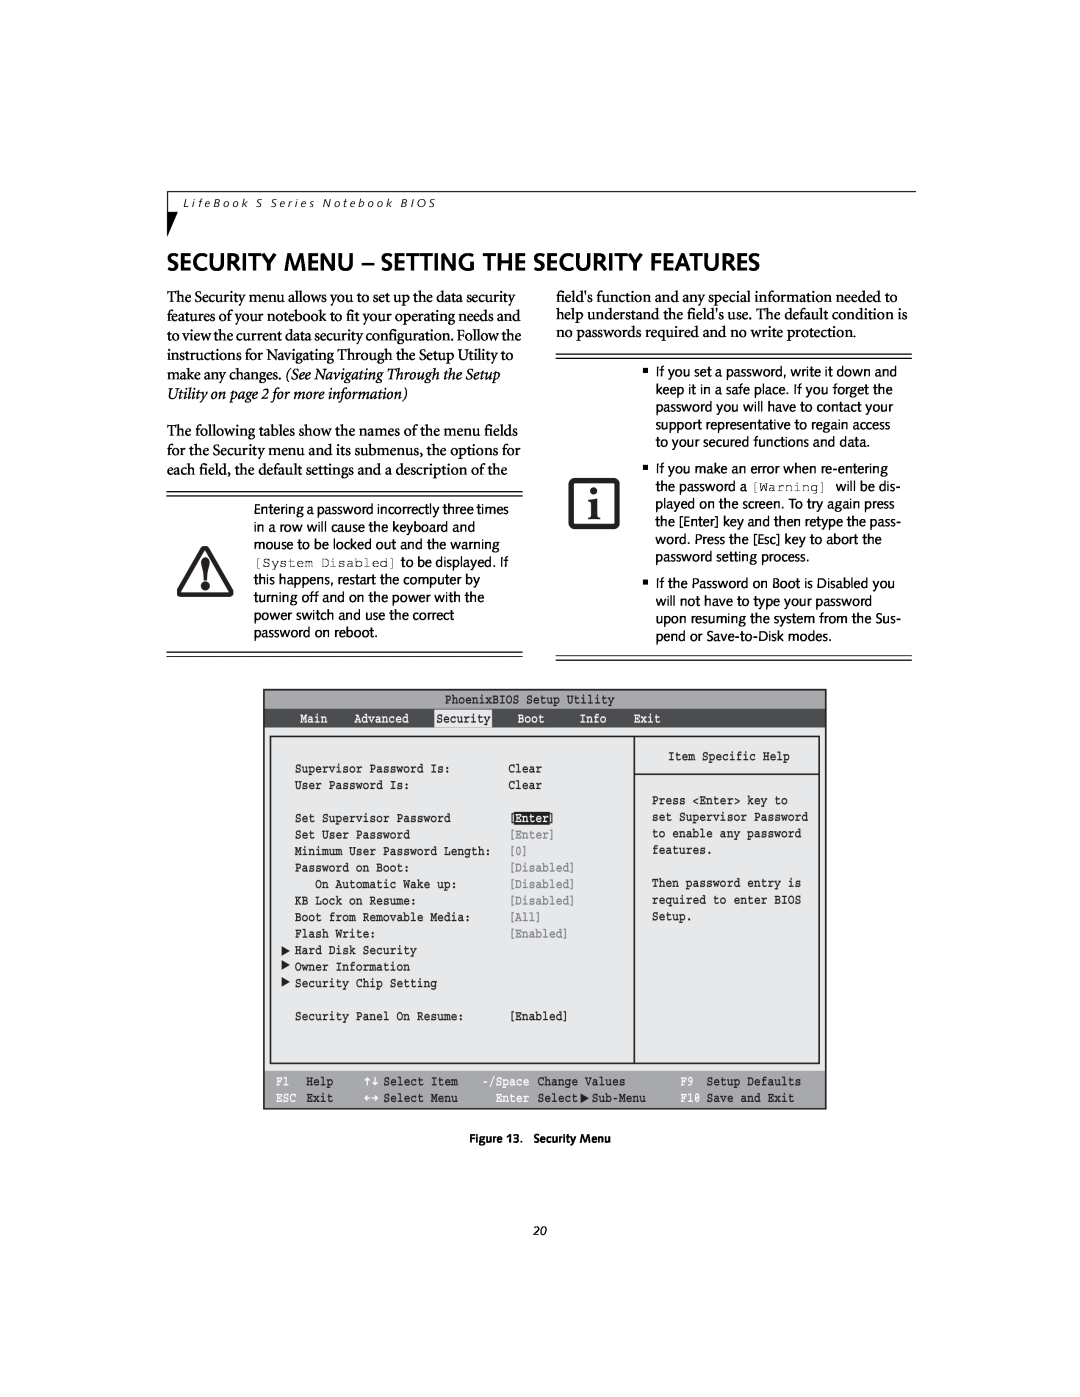 Fujitsu S7020D manual Security Menu - Setting The Security Features, Enter 